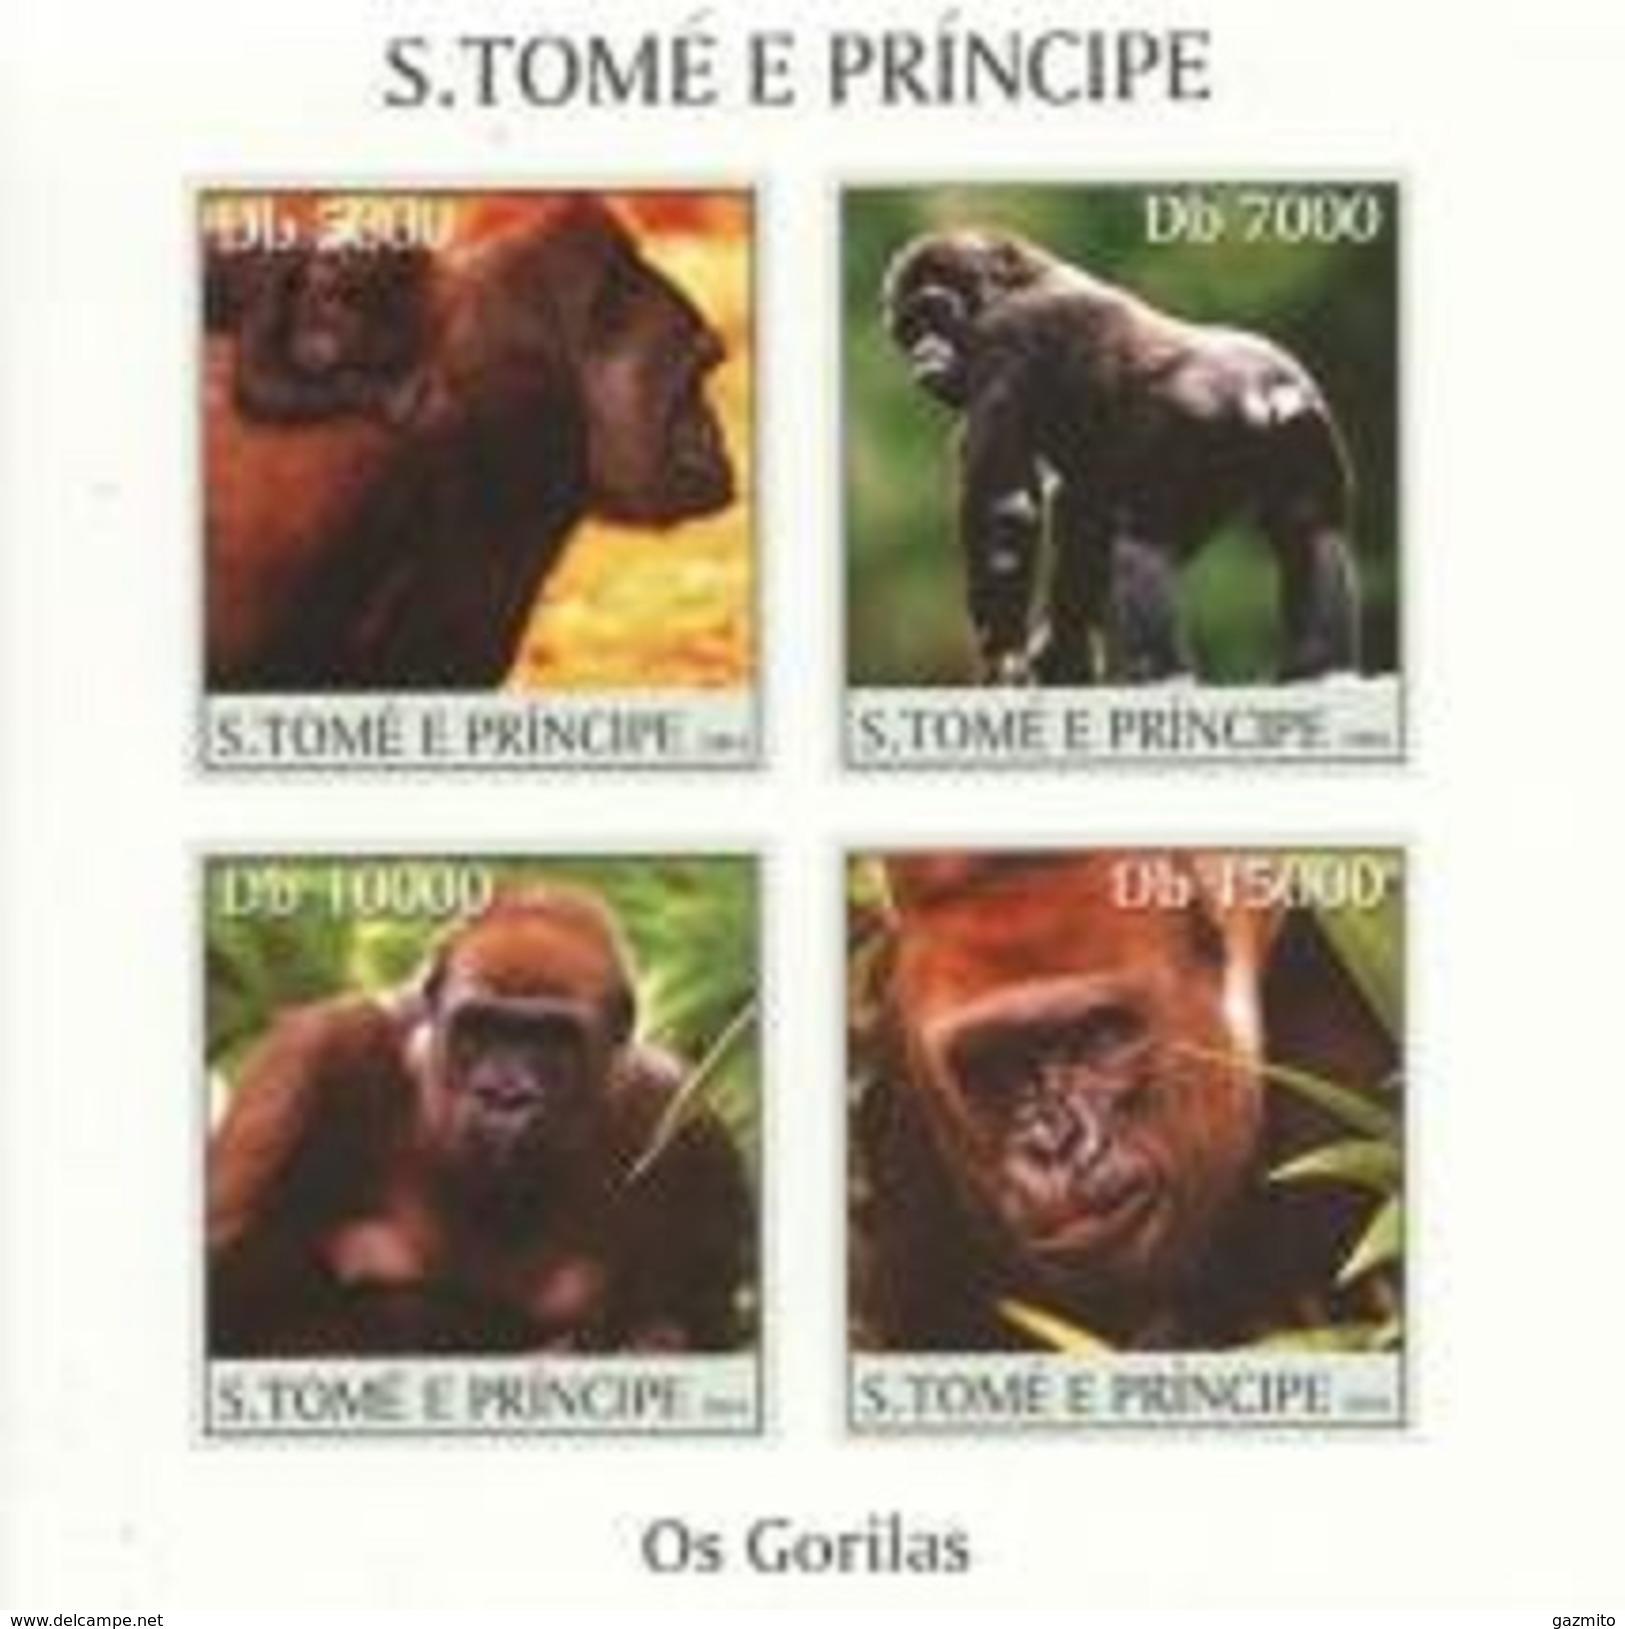 S. Tomè 2004, Animals, Gorillas, 4val In BF IMPERFORATED - Gorilla